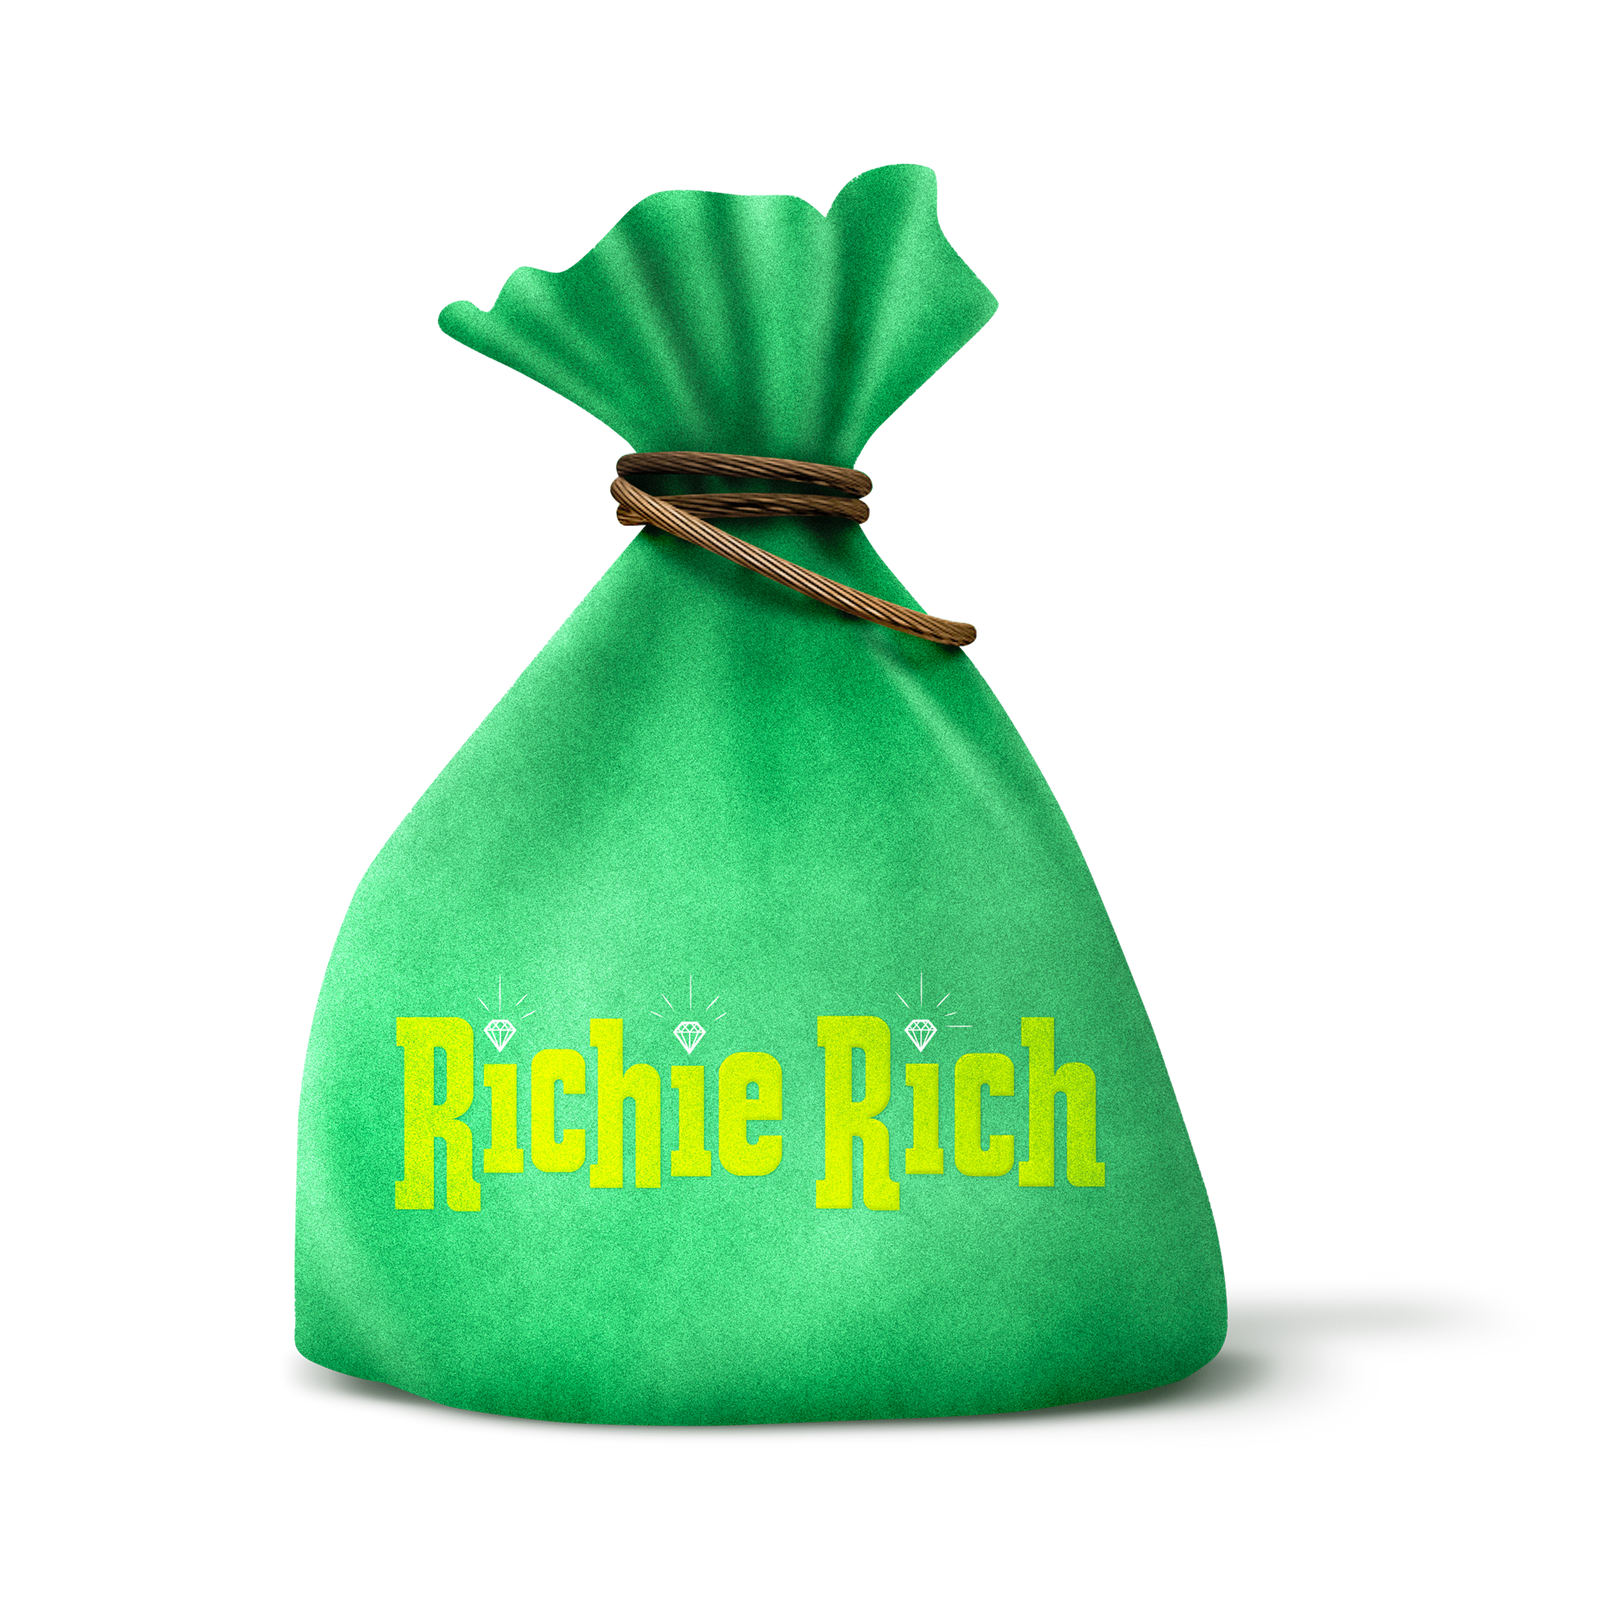 Richie Rich logo.